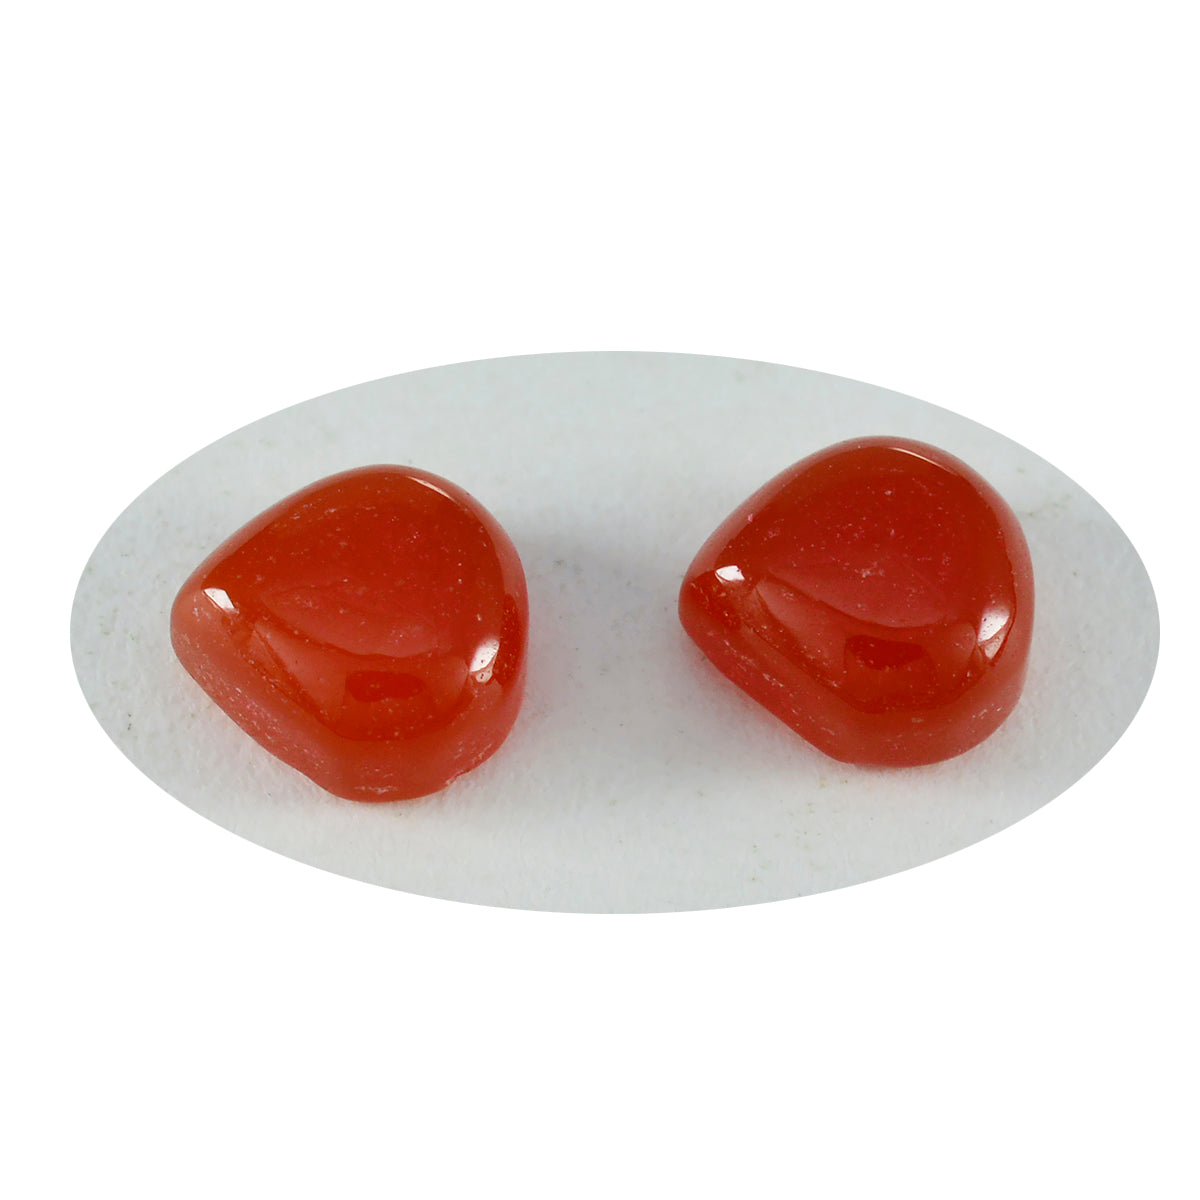 Riyogems 1PC Red Onyx Cabochon 13x13 mm Heart Shape astonishing Quality Loose Gemstone